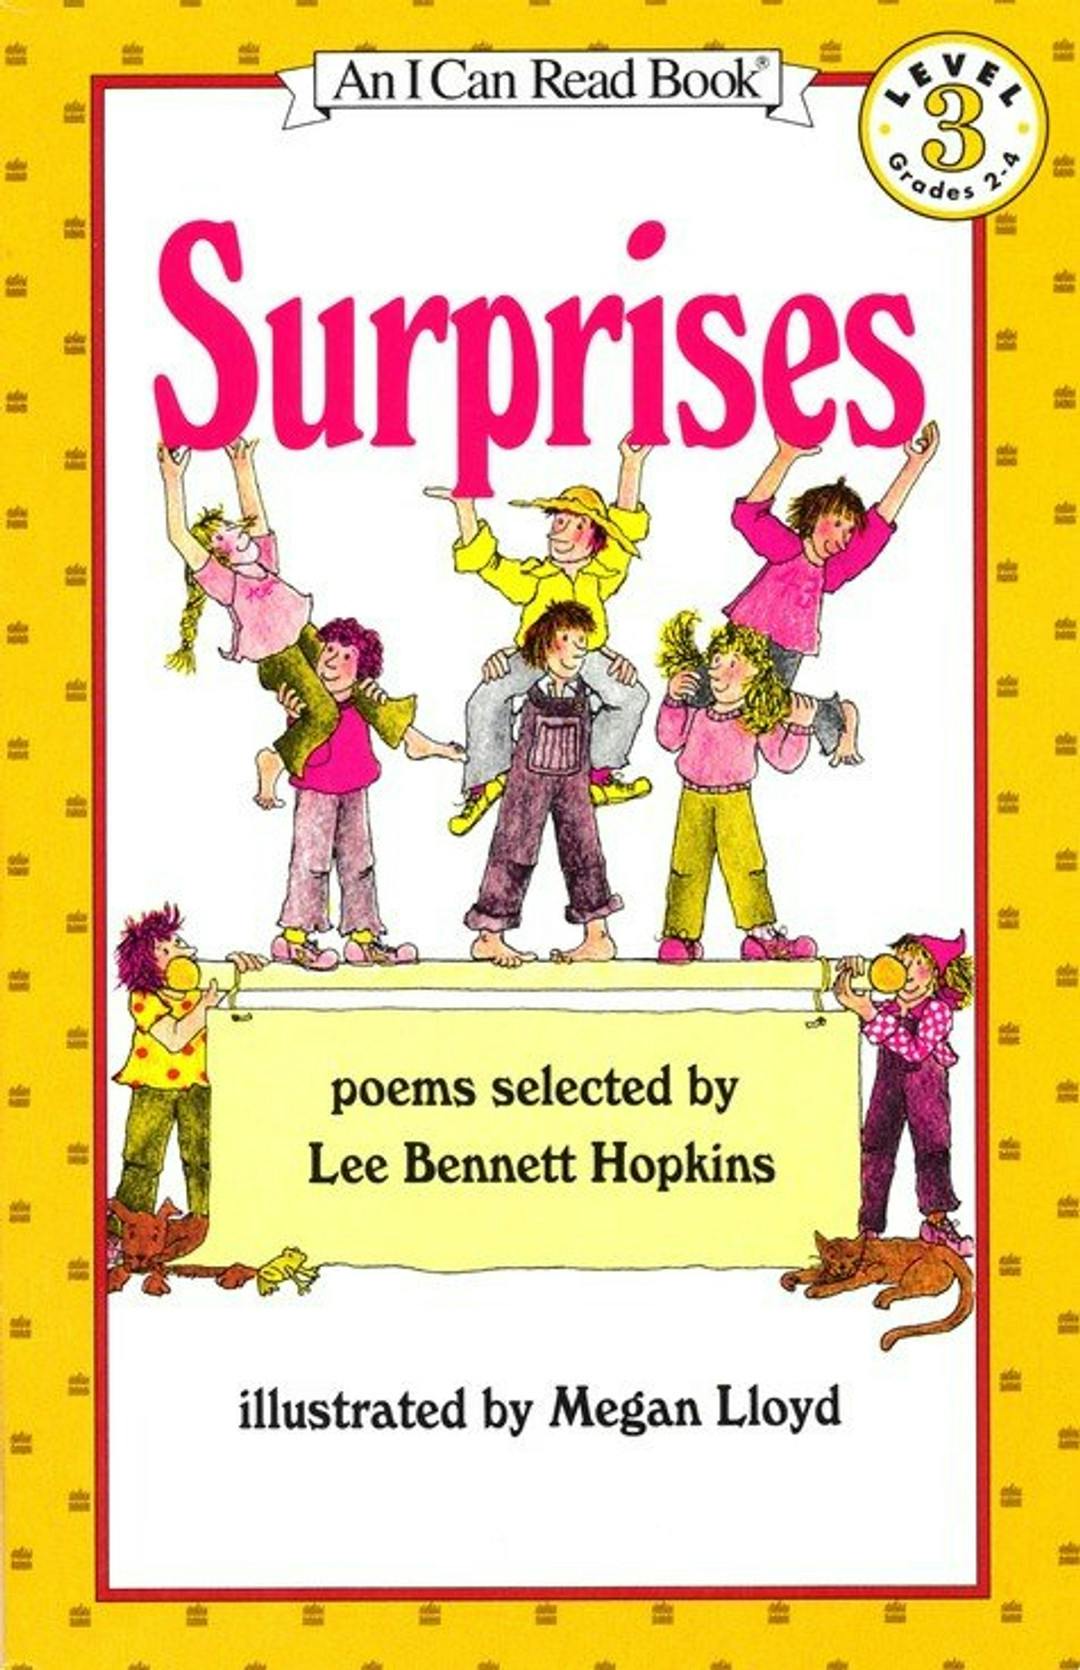 Surprises: Poems Selected by Lee Bennett Hopkins